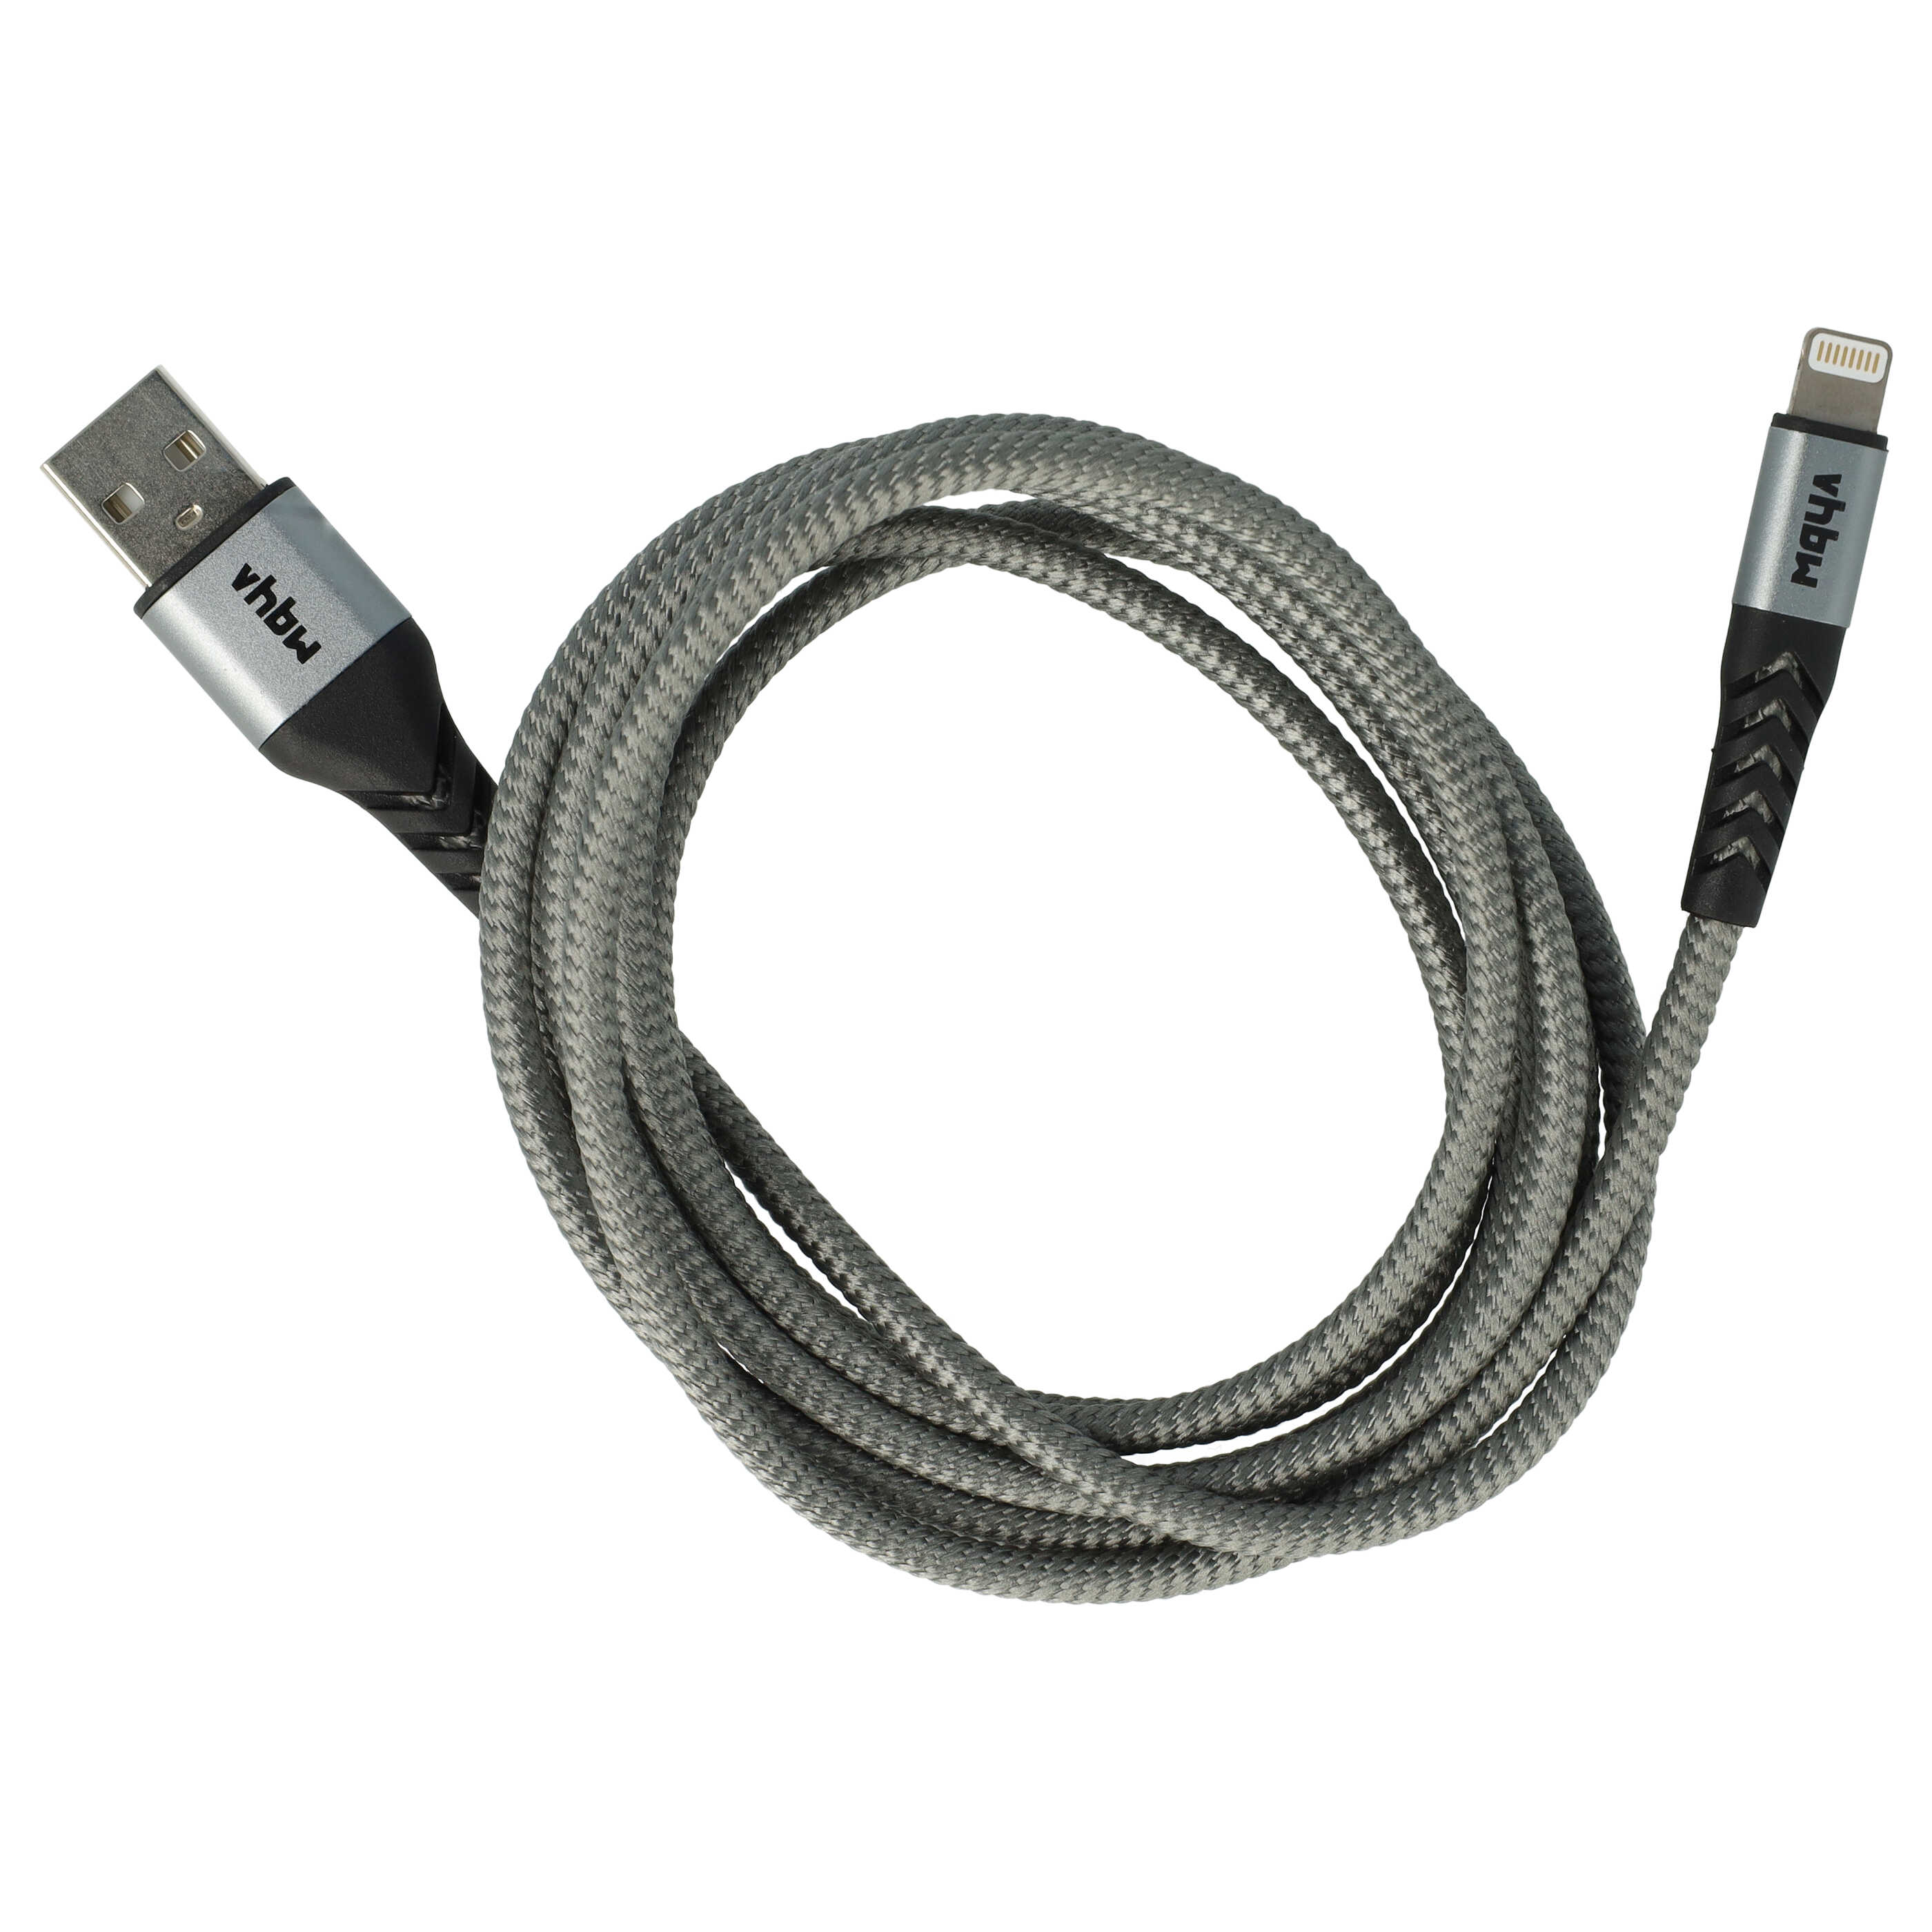 Cable lightning a USB A para dispositivos Apple iOS Apple AirPods - negro / gris, 180 cm